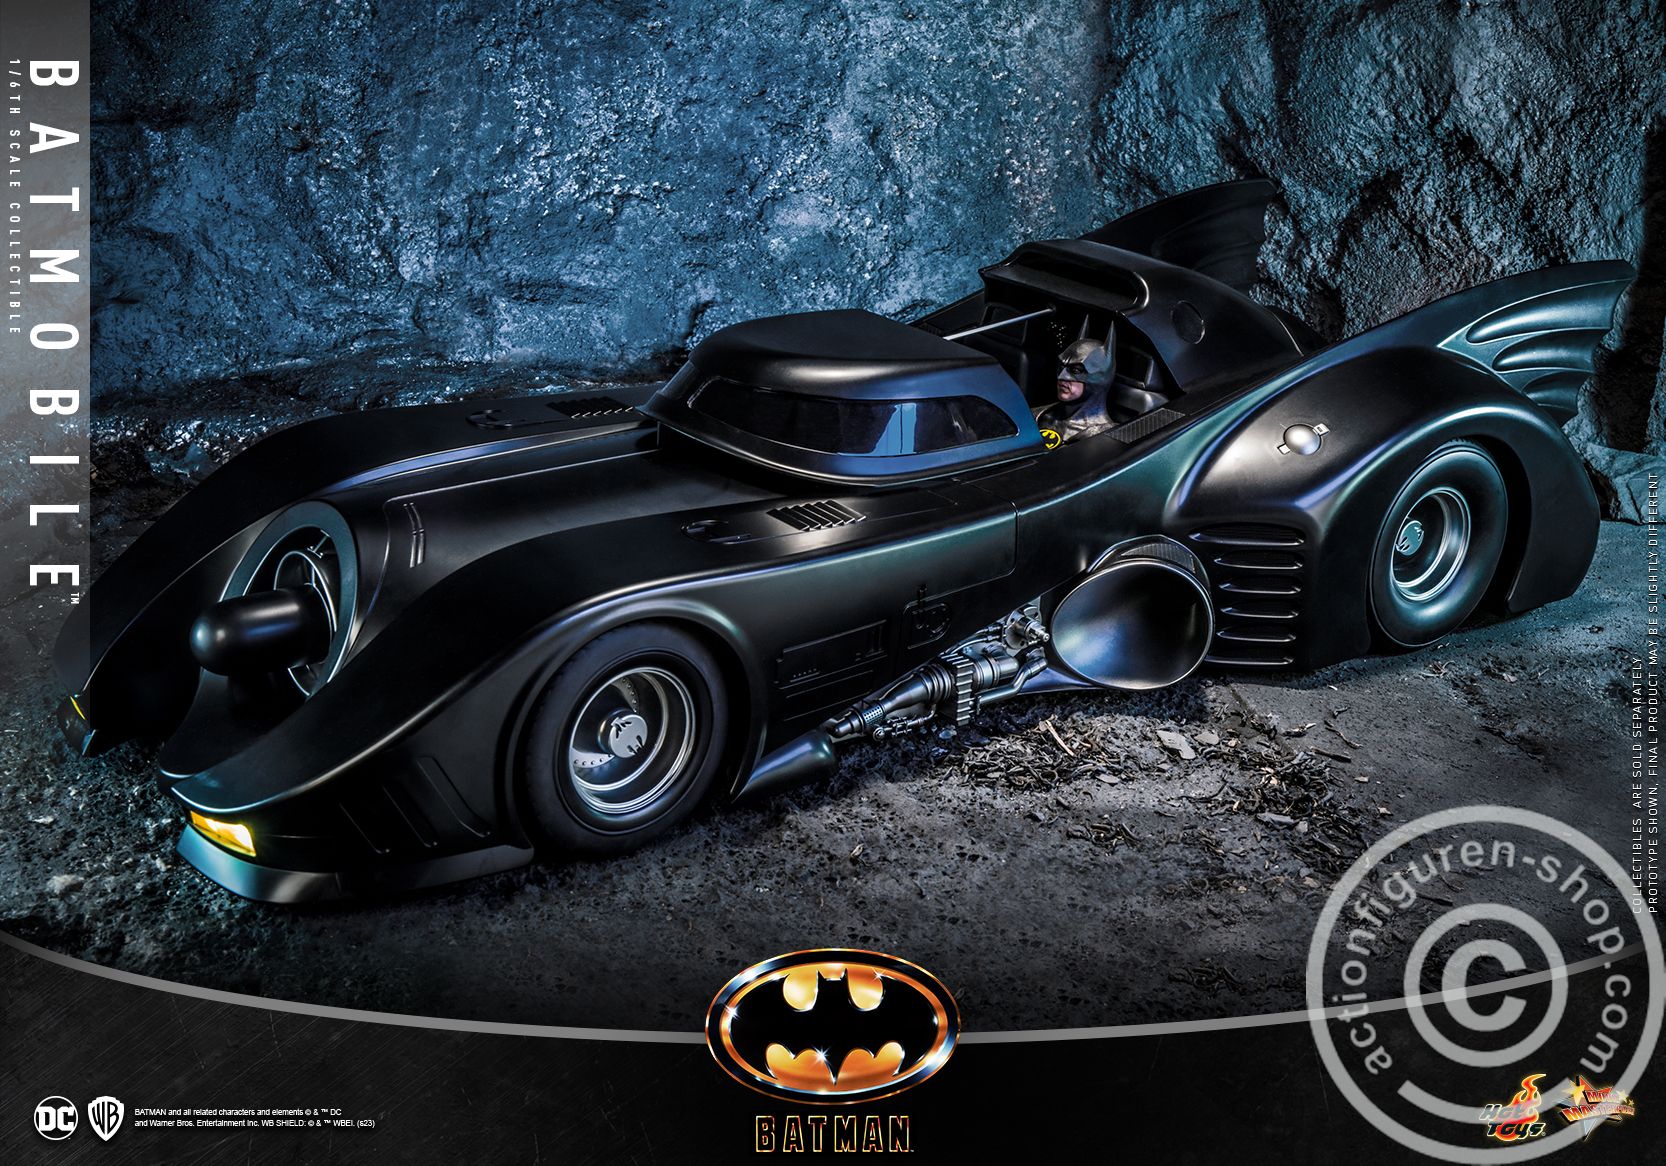 Batman (1989) - Batmobile